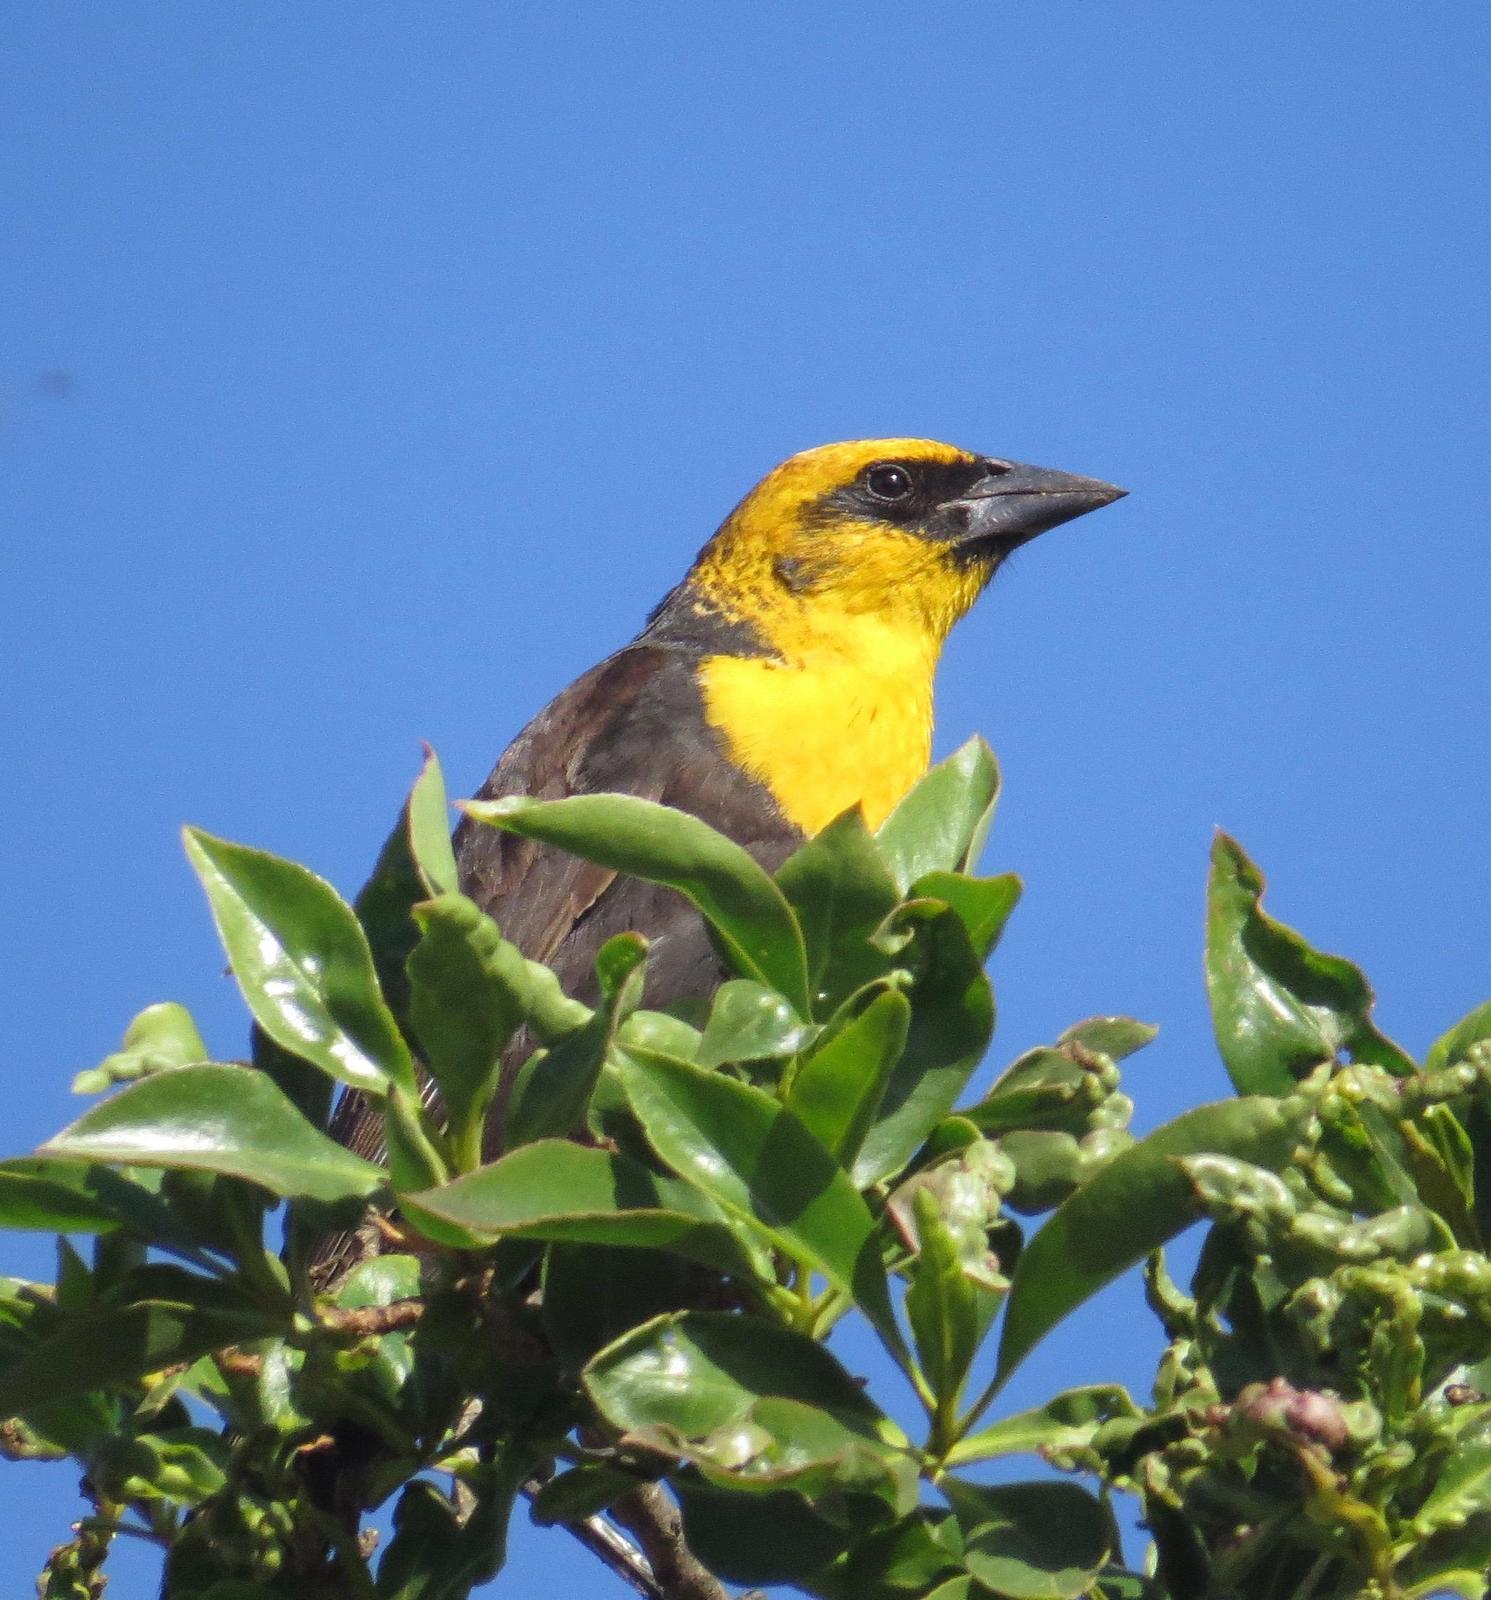 Yellow-headed Blackbird Photo by Don Glasco